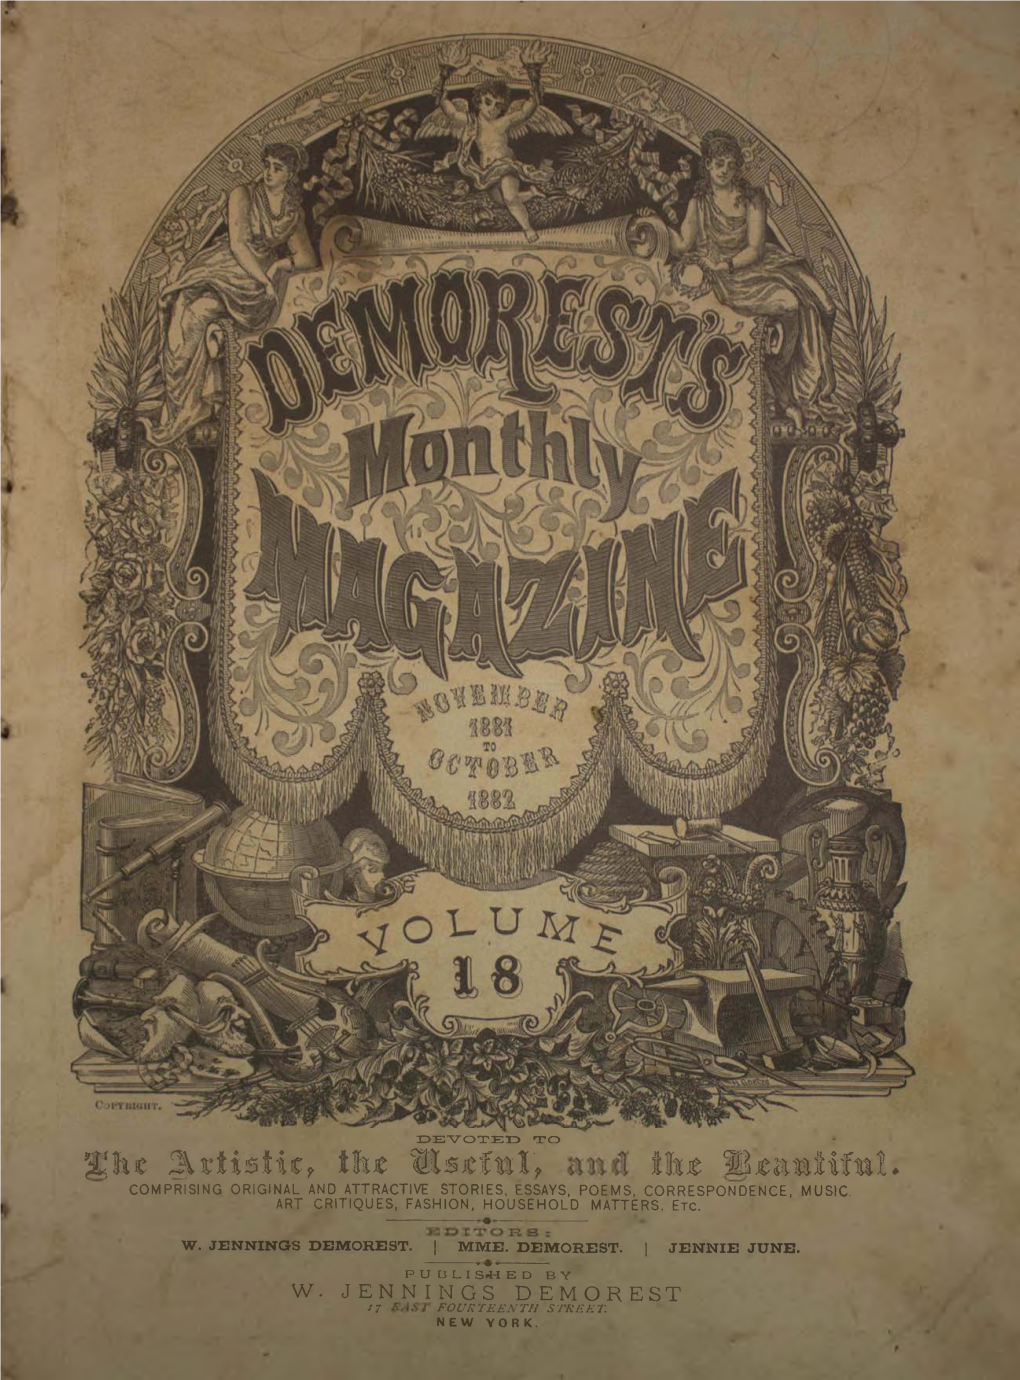 Demorest's Family Magazine. November 1881. Vol. 18, No. 1